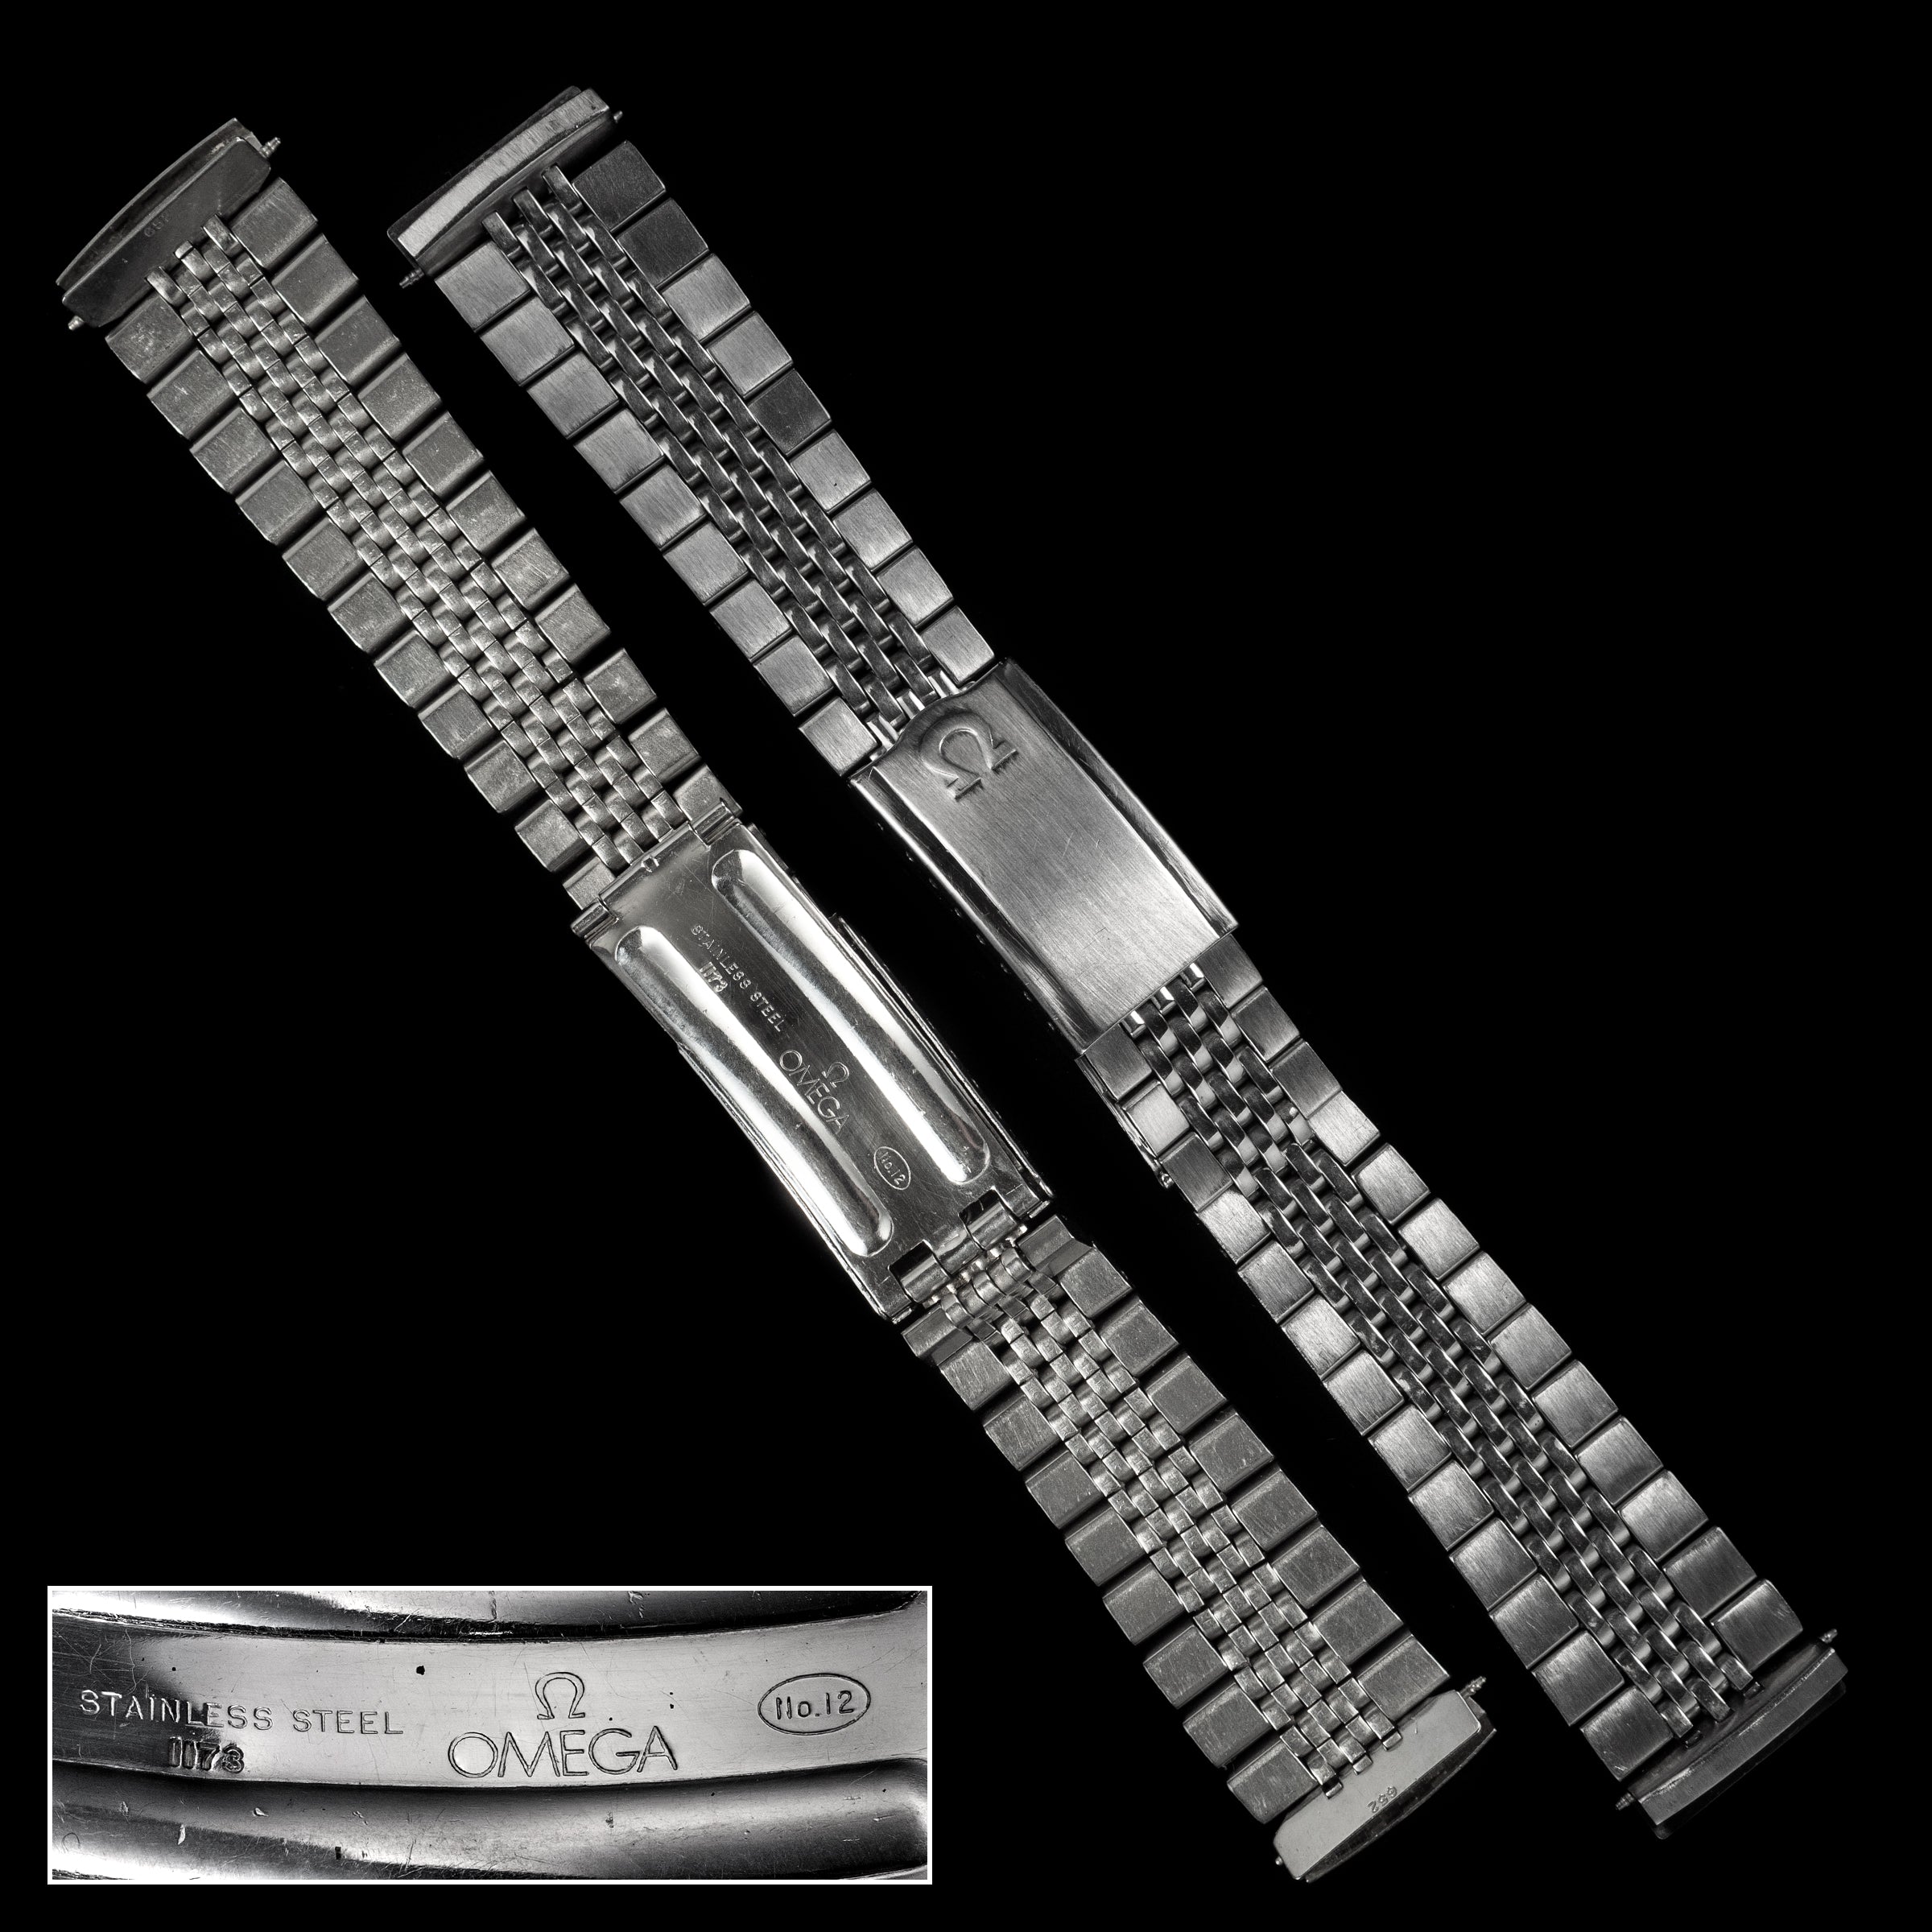 Omega seamaster 20mm 1610 930 62 band bracelet speedmaster steel for $547  for sale from a Trusted Seller on Chrono24